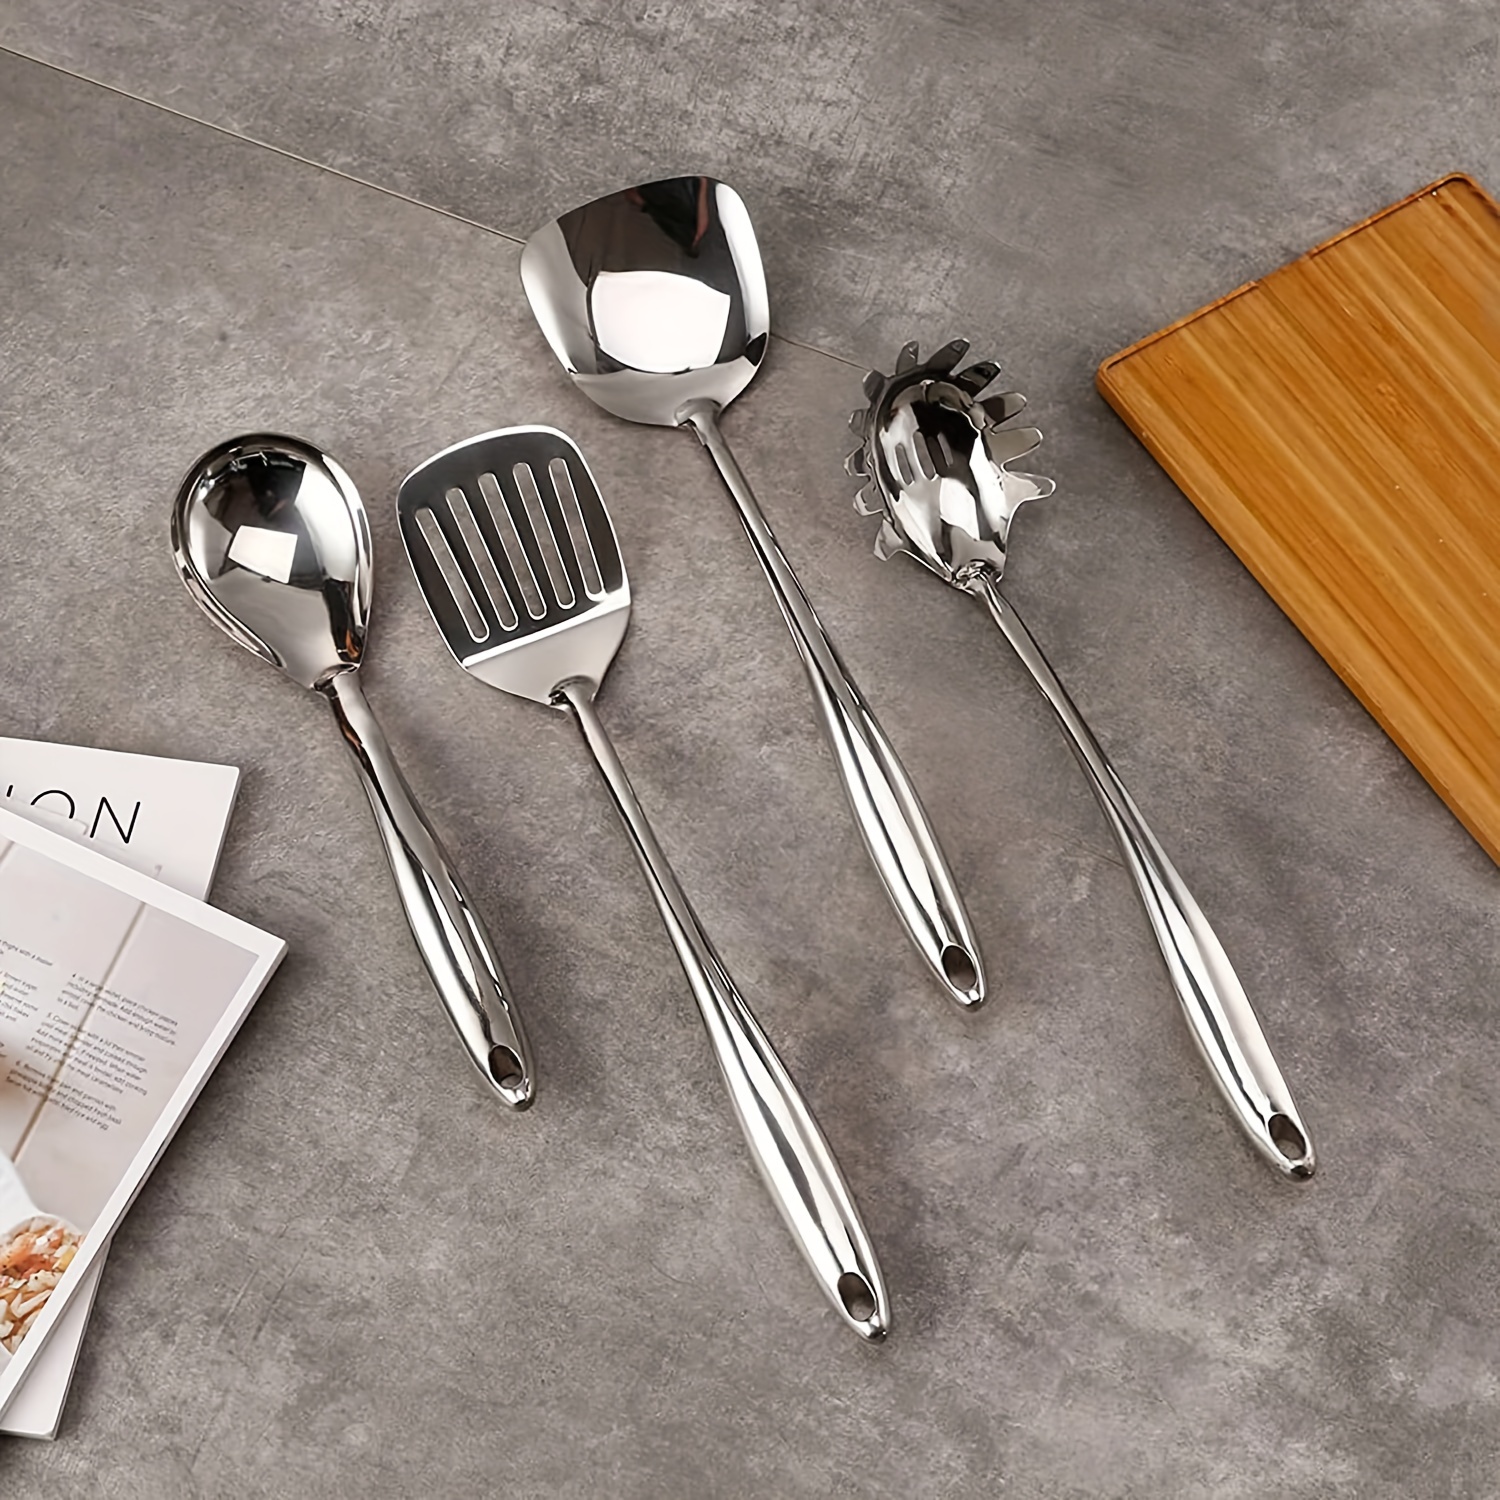 Stainless-Steel Kitchen Utensil Set - 10-piece premium Nonstick & Heat  Resistant Kitchen Gadgets, Turner, Spaghetti Server, Ladle, Serving Spoons